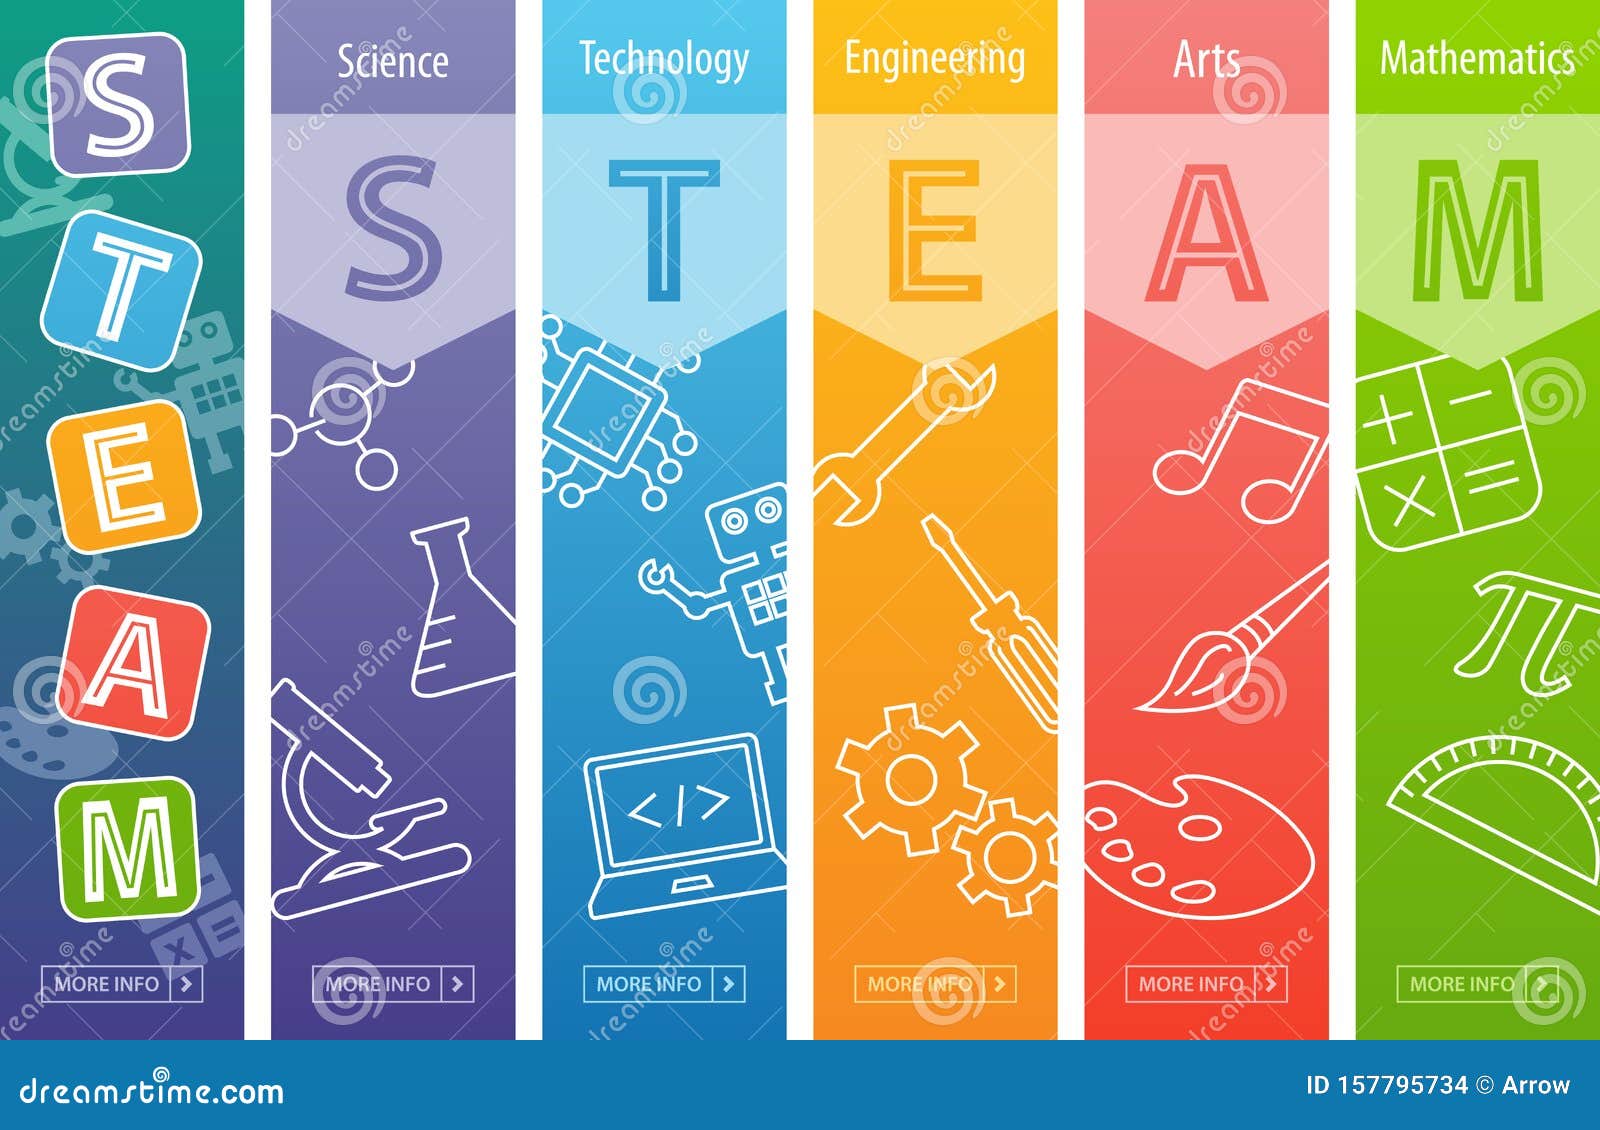 steam education web banner